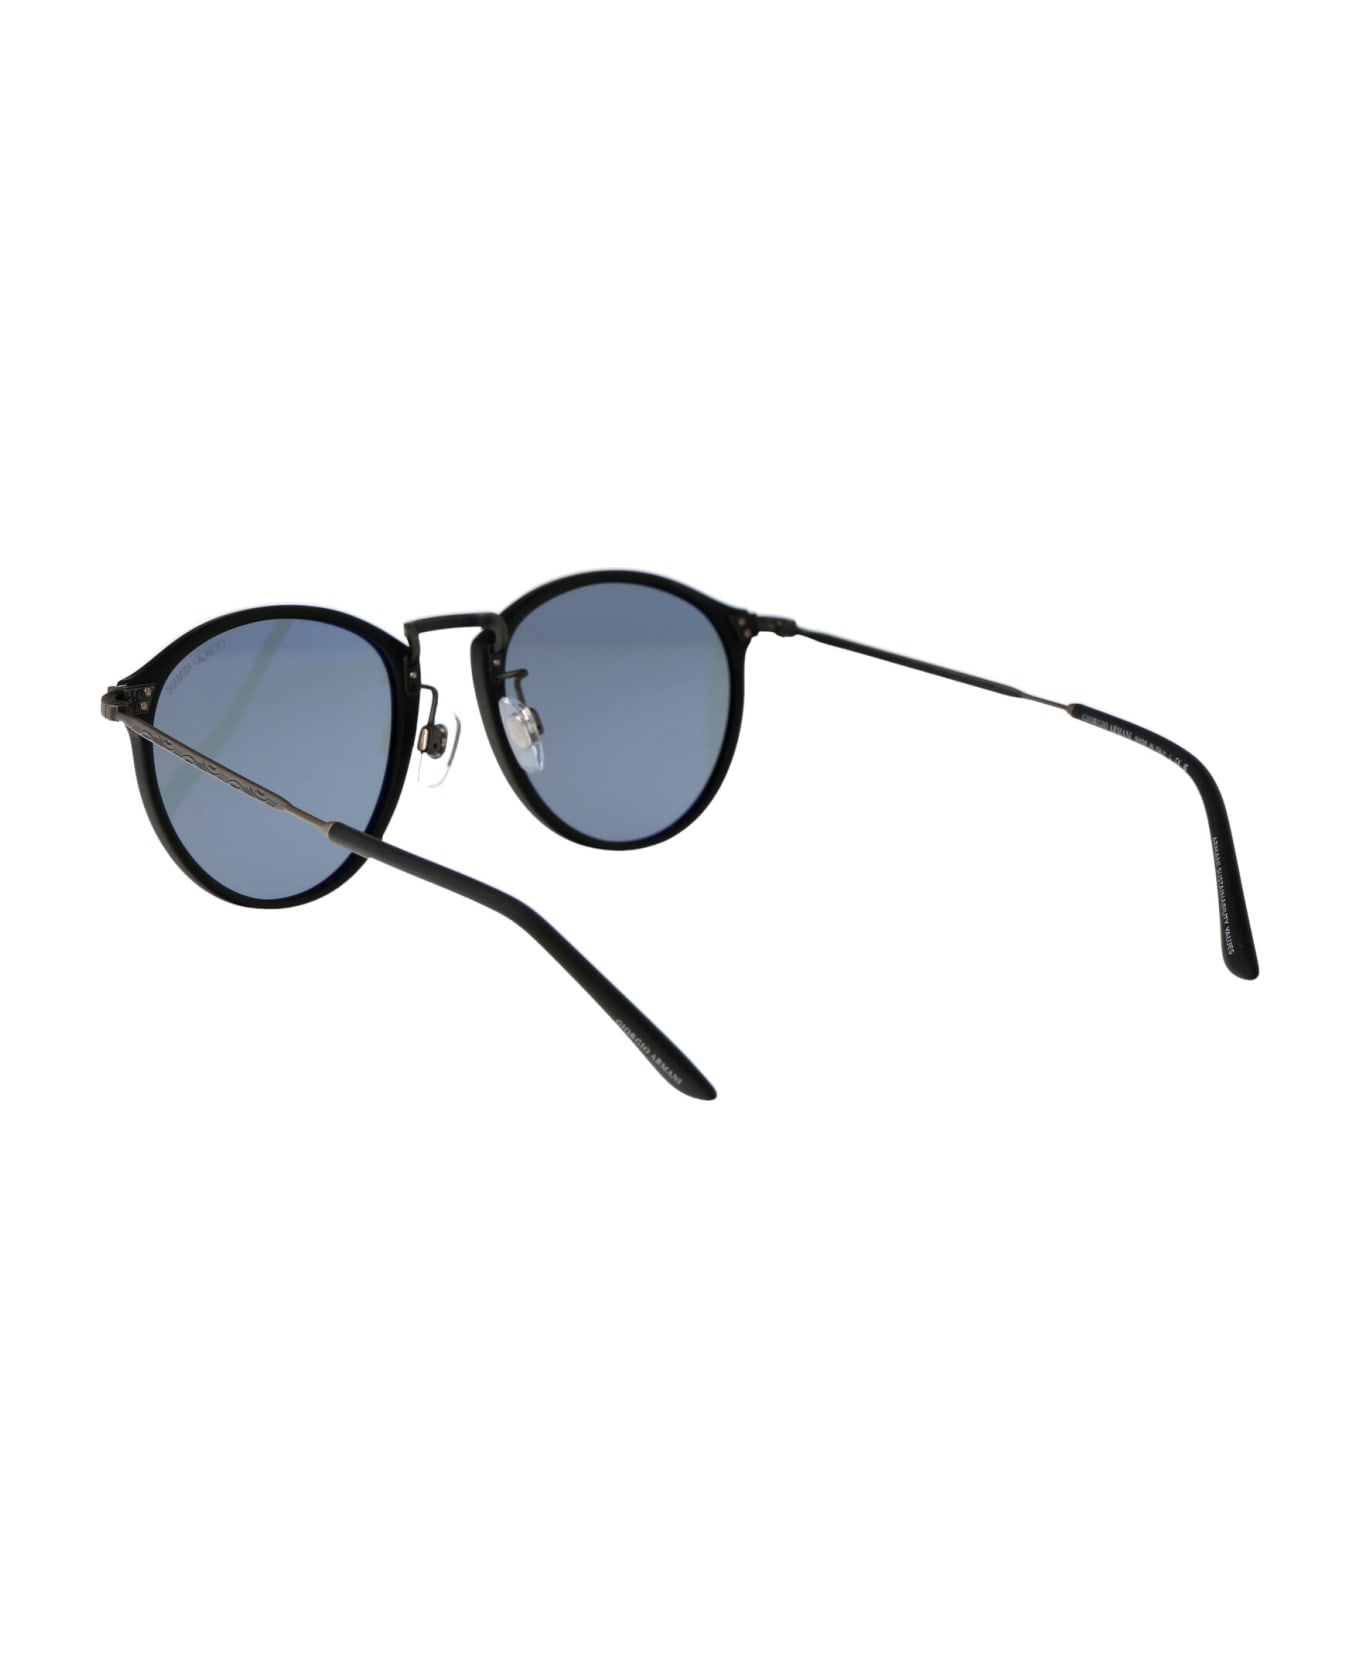 Giorgio Armani 0ar 318sm Sunglasses - 504256 Matte Black サングラス